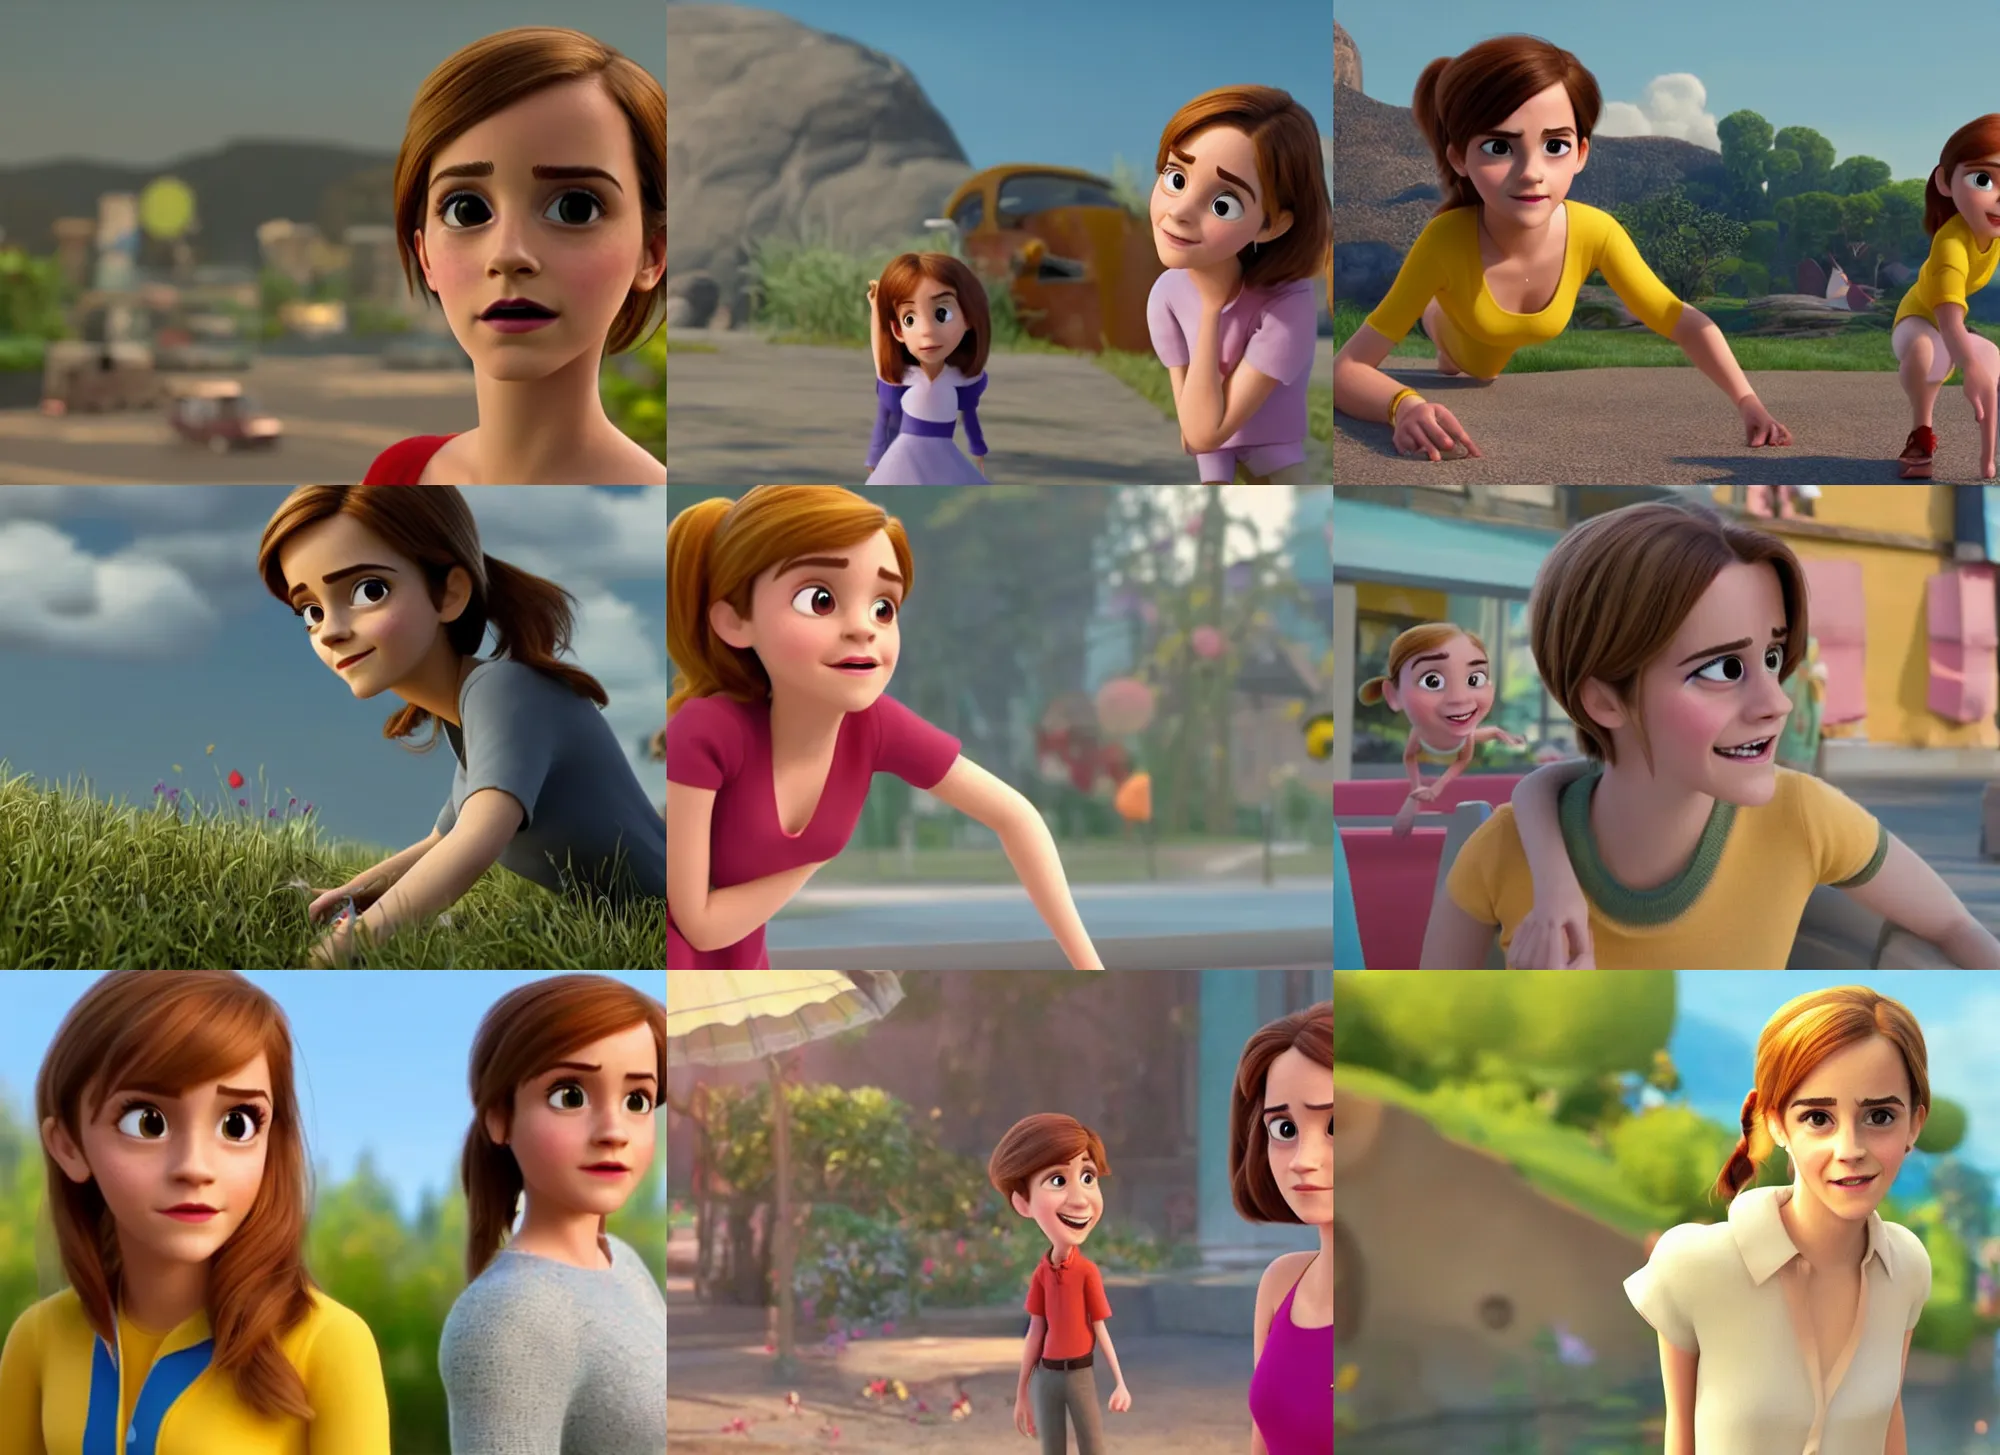 Prompt: emma watson in a pixar animated movie, pixar style, movie still frame, vibrant